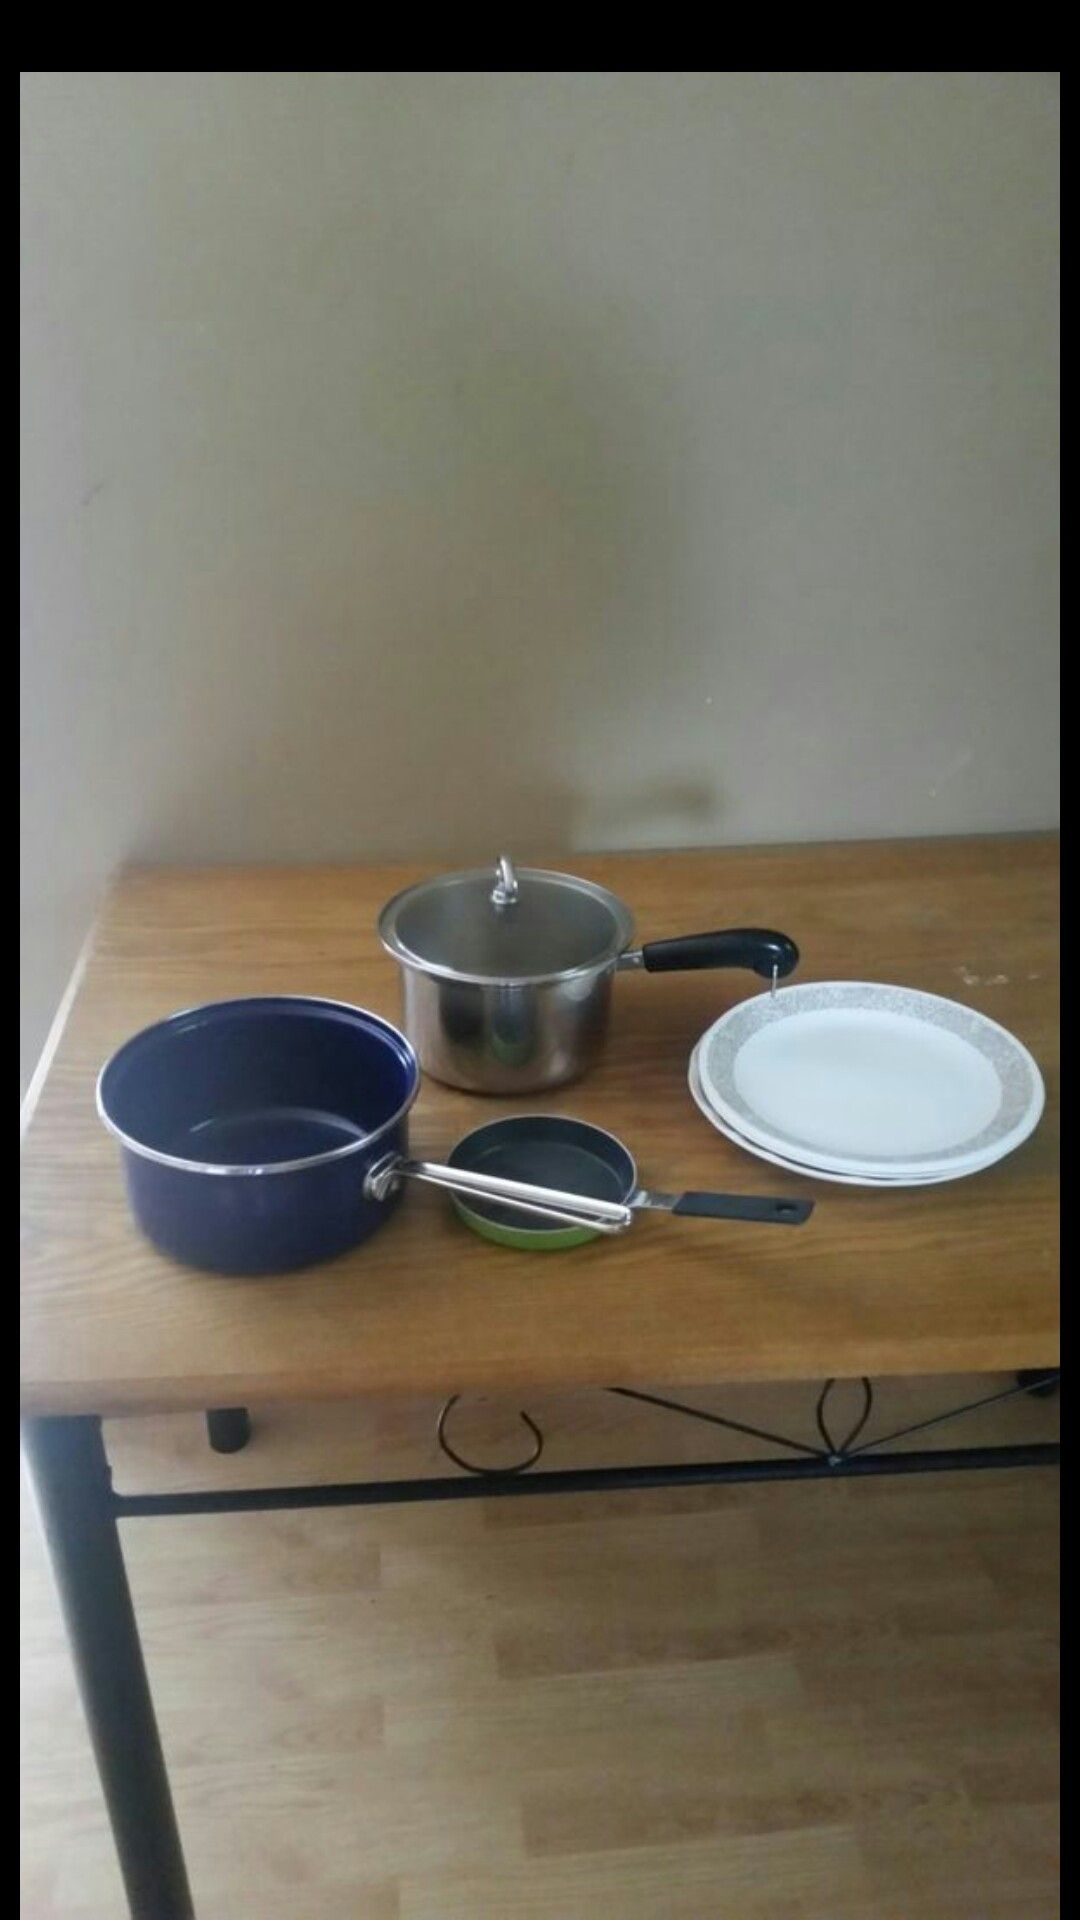 Kitchen pots, pan, and plates.